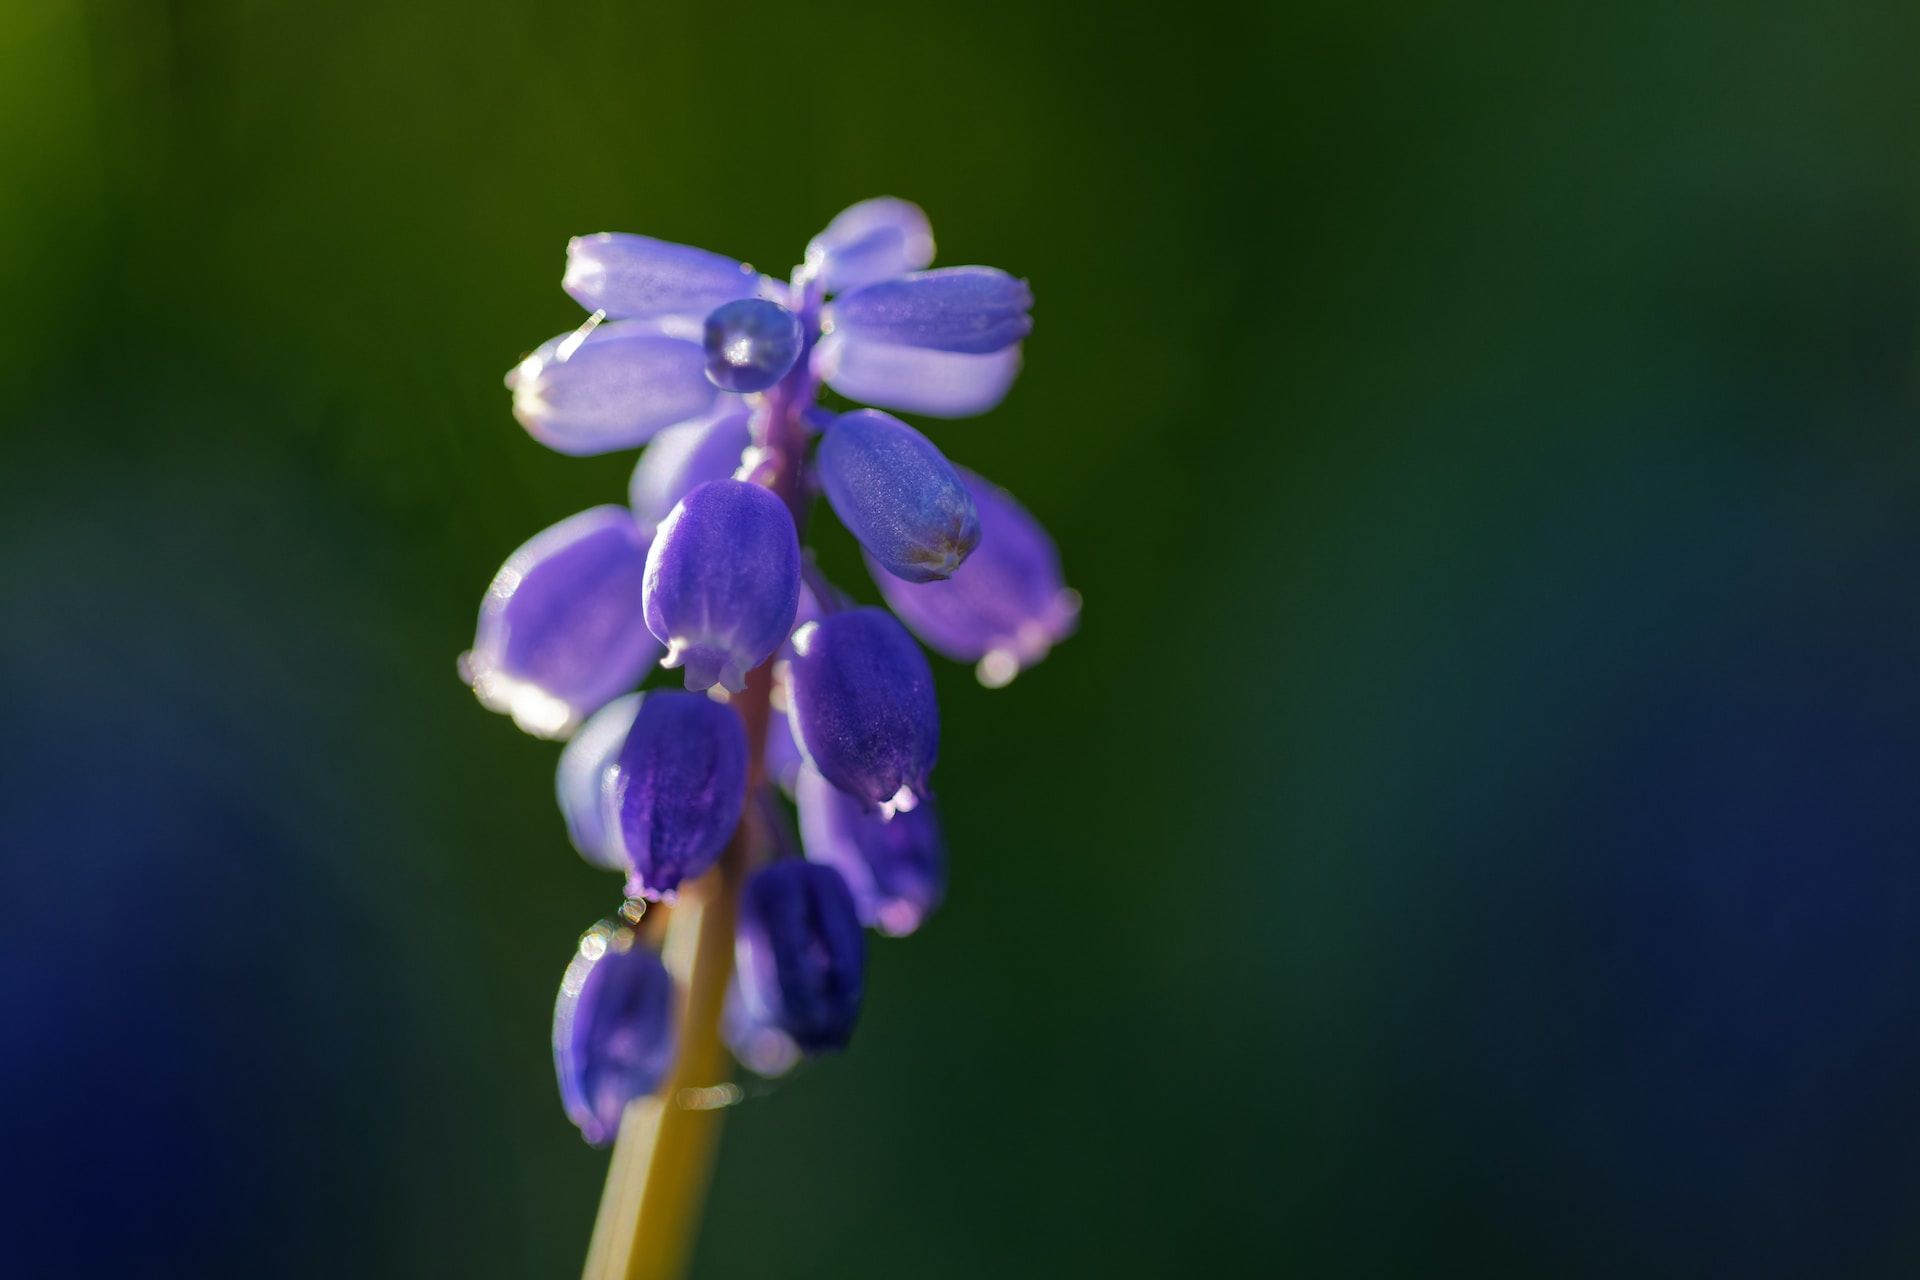 a stalk of purple hyacinth